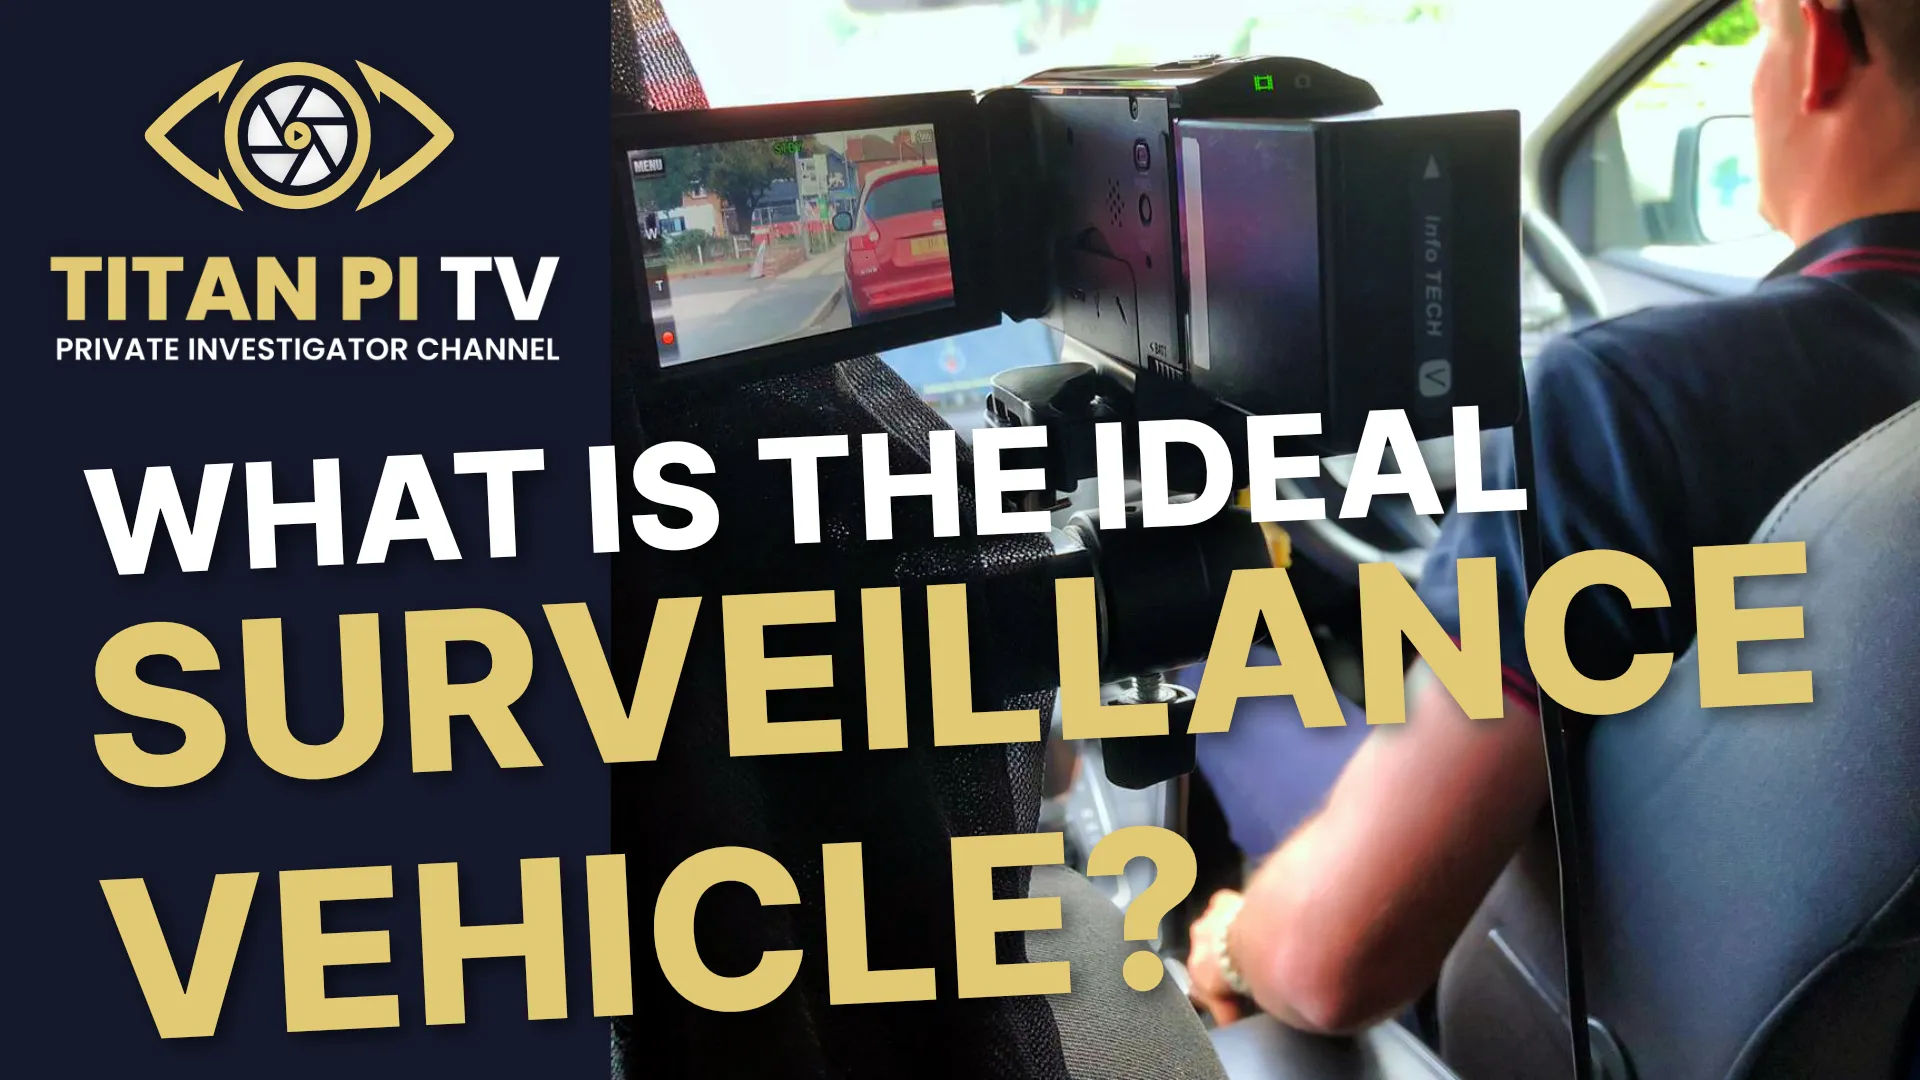 What is the ideal surveillance vehicle? Episode 61 | Titan PI TV